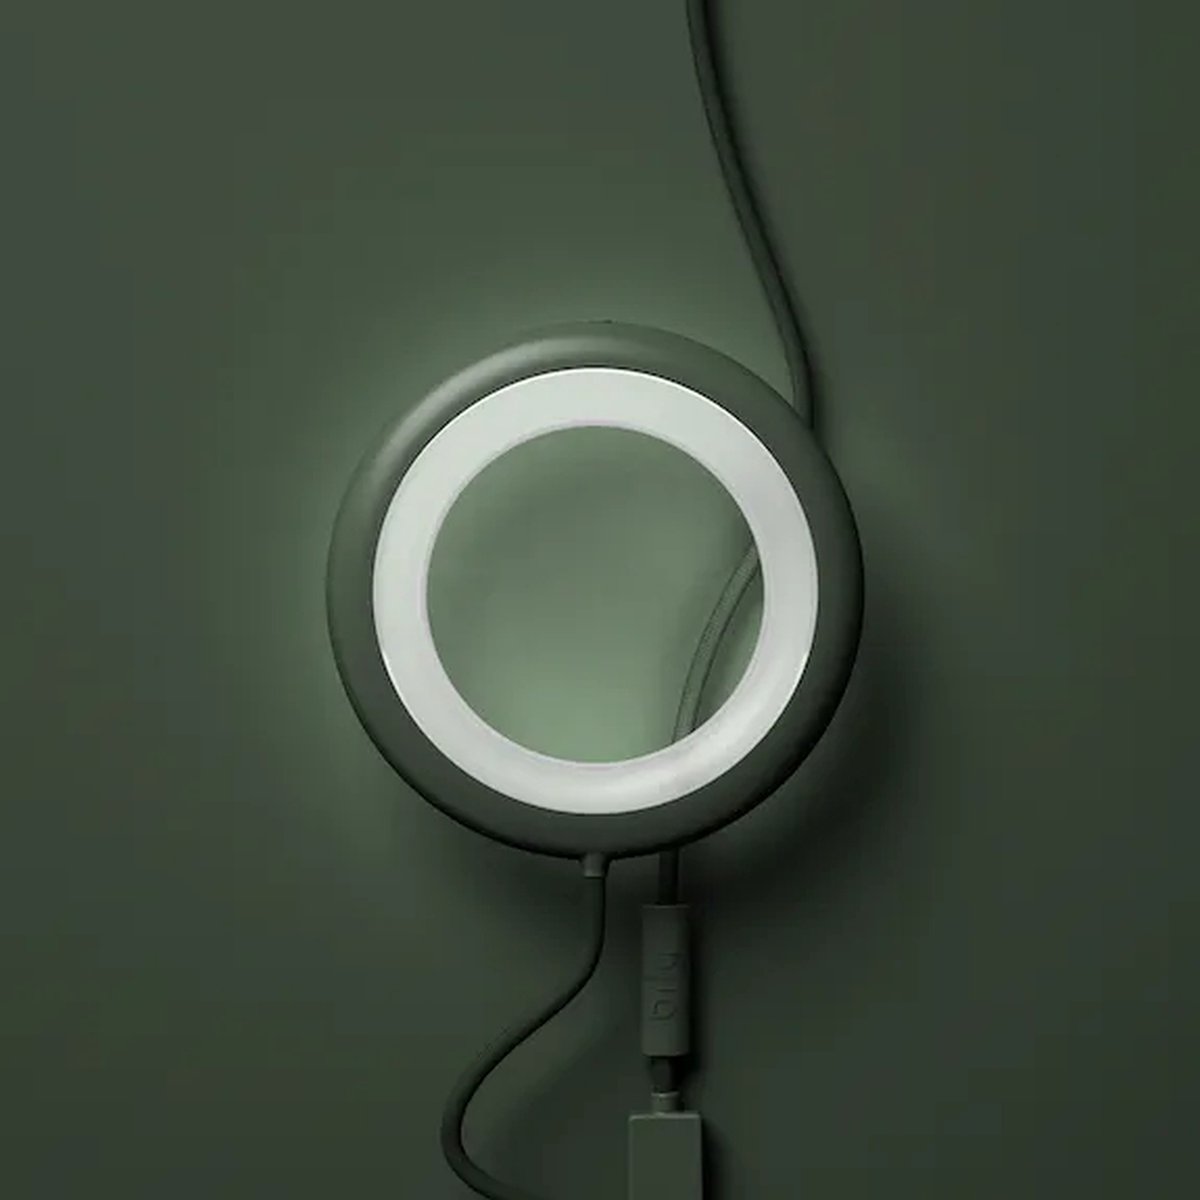 Bily - Nomanden lamp - Groen - leeslamp - reislamp - zaklamp - telefoonaccessoires - design